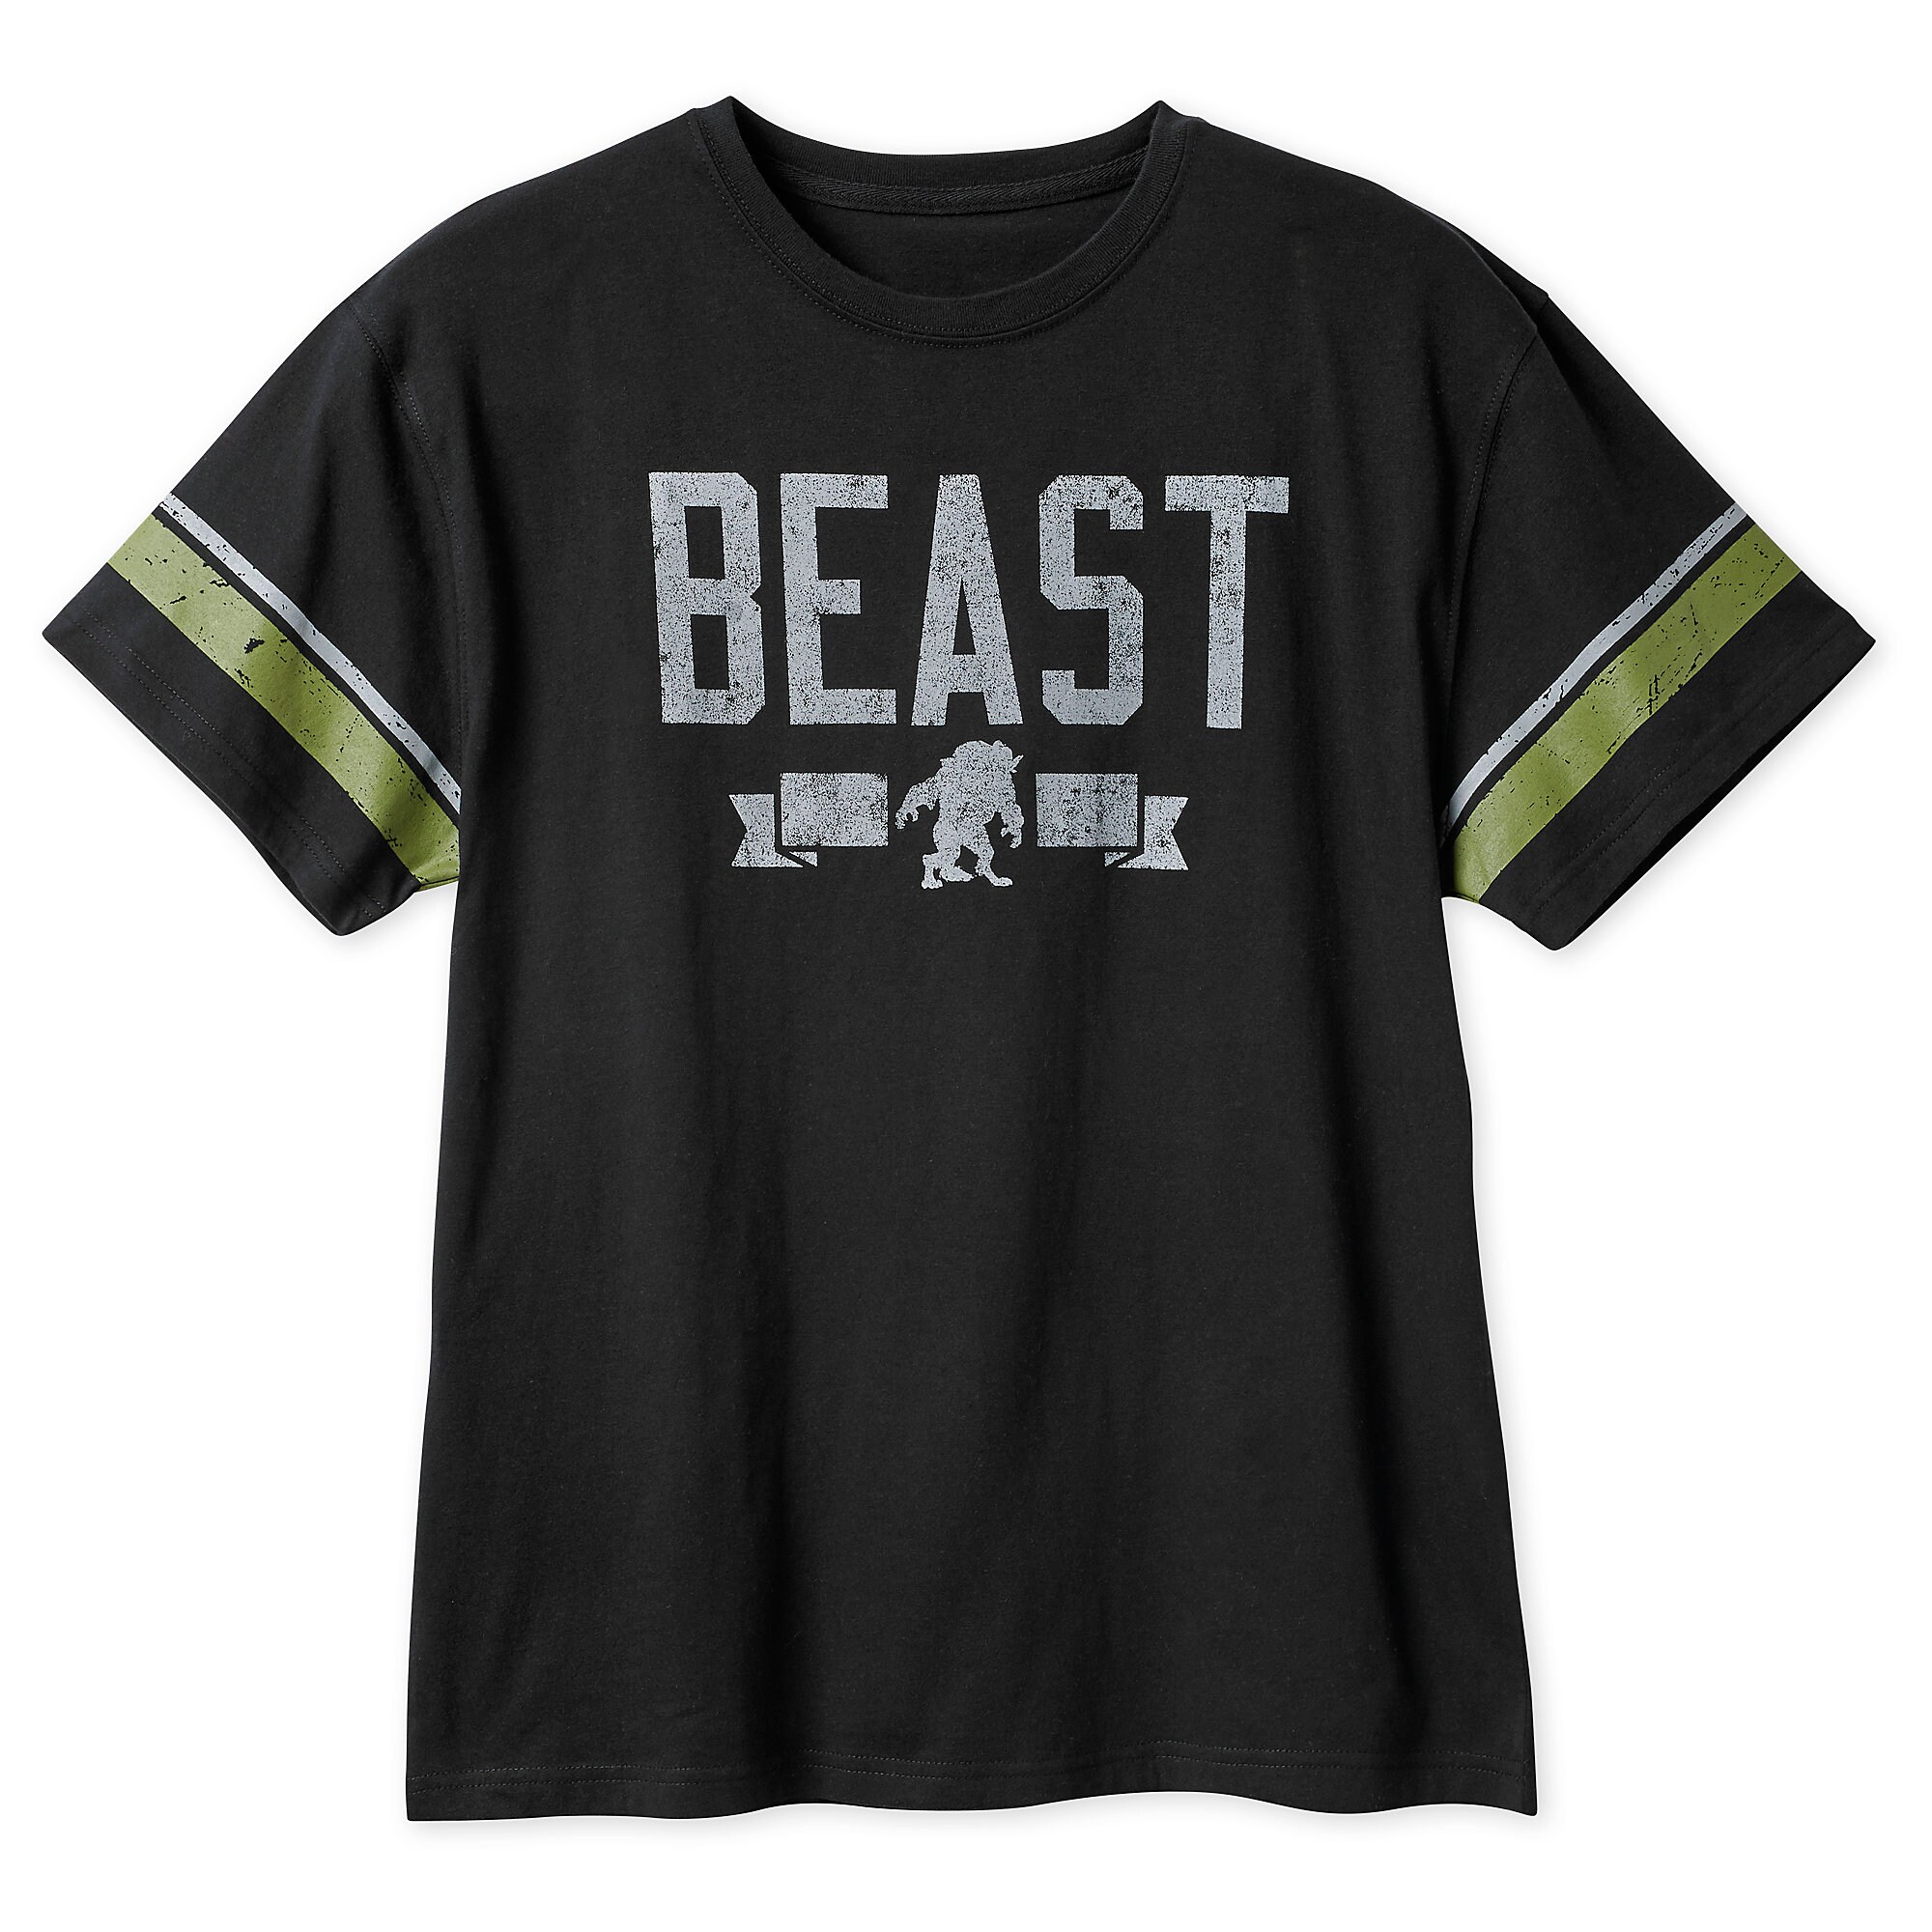 Beast Athletic T-Shirt for Men